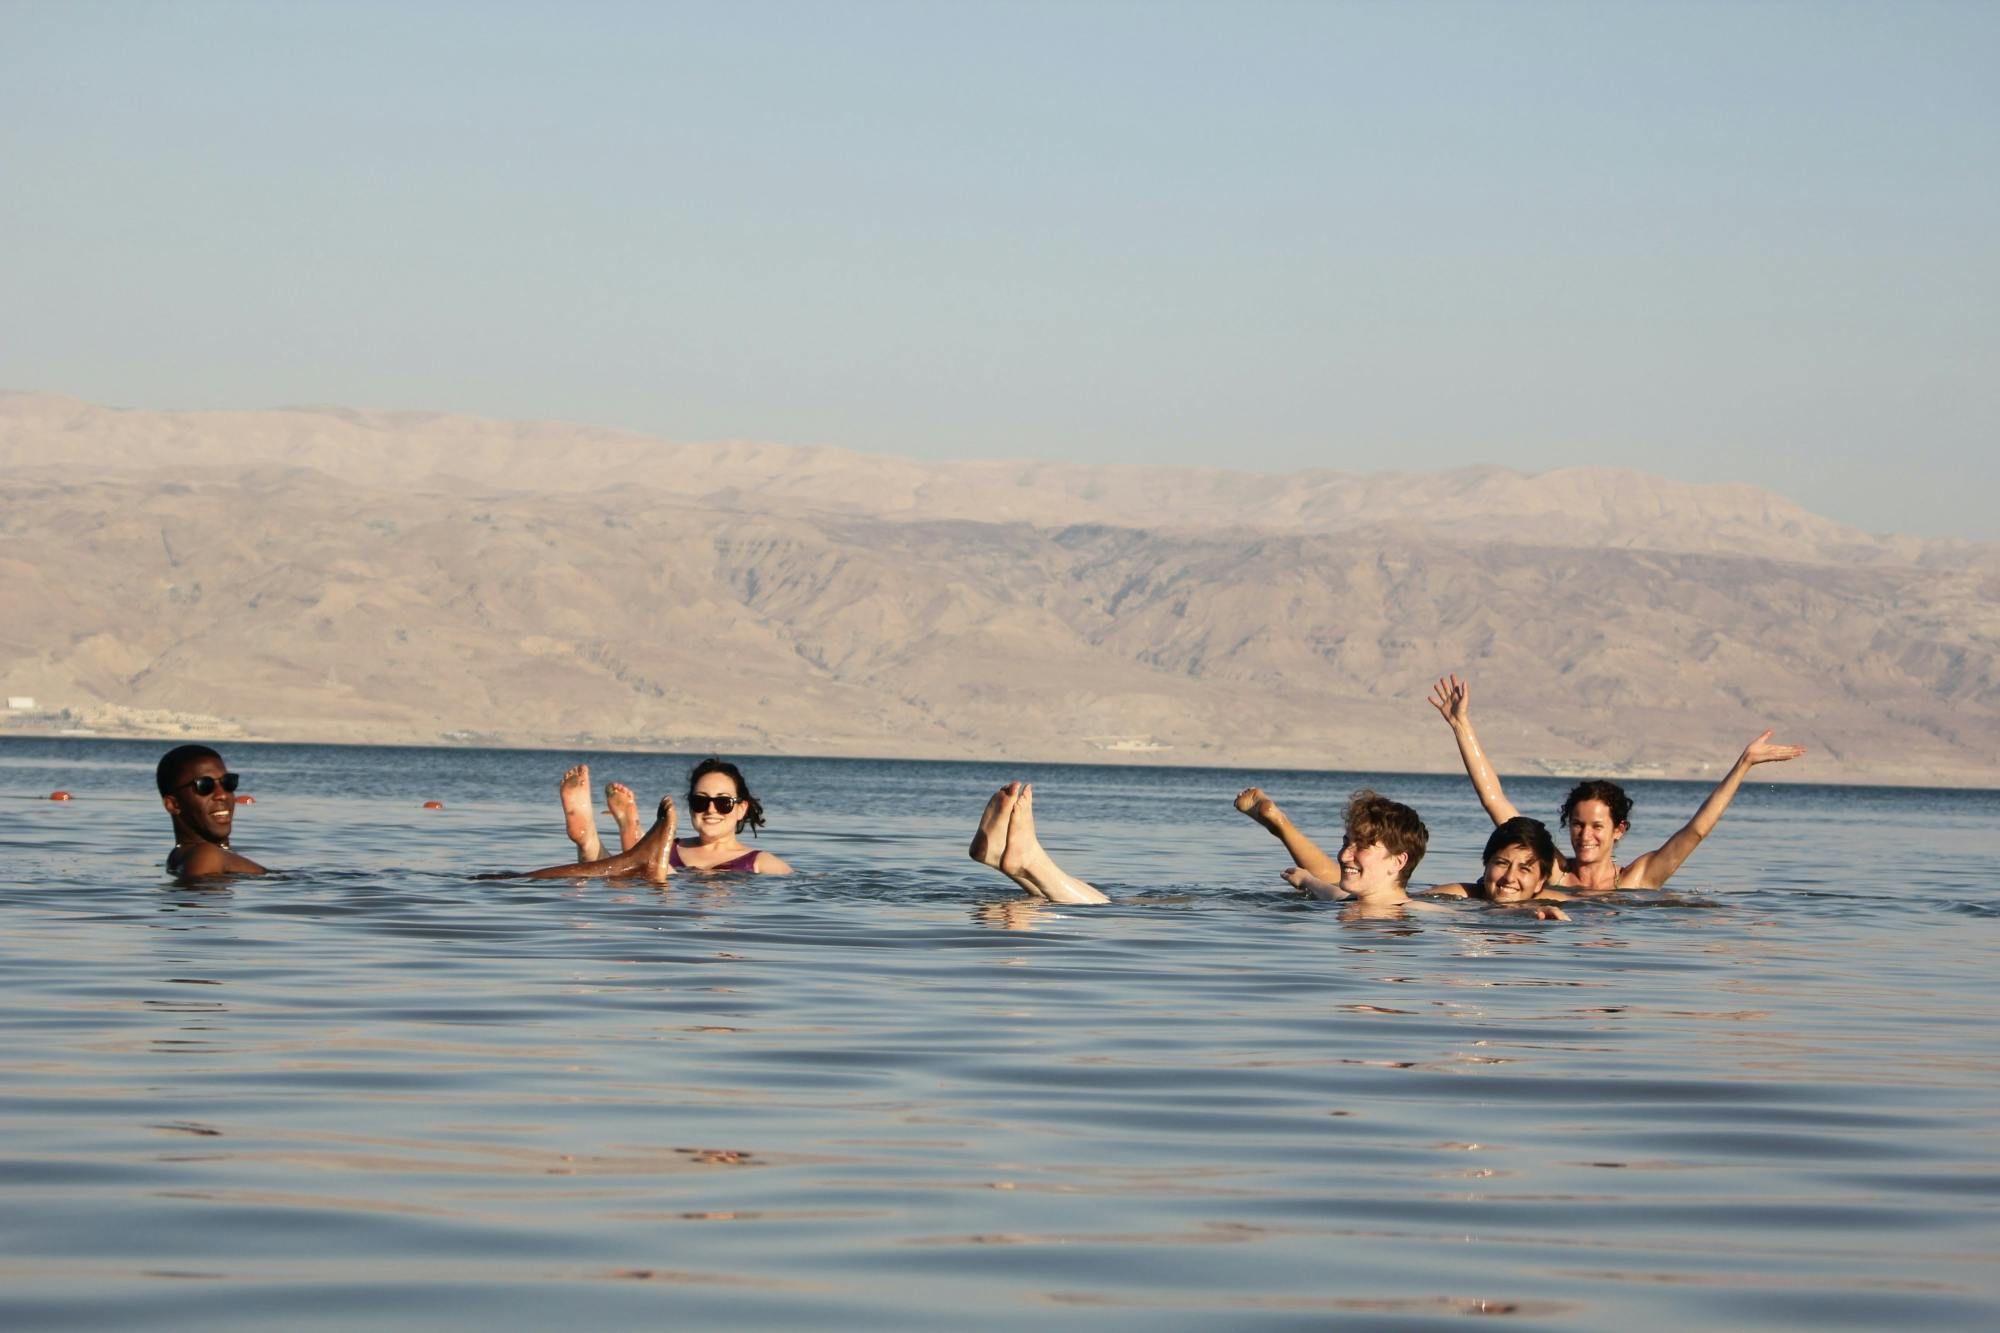 Day trip to Masada, Ein Gedi and Dead Sea from Jerusalem